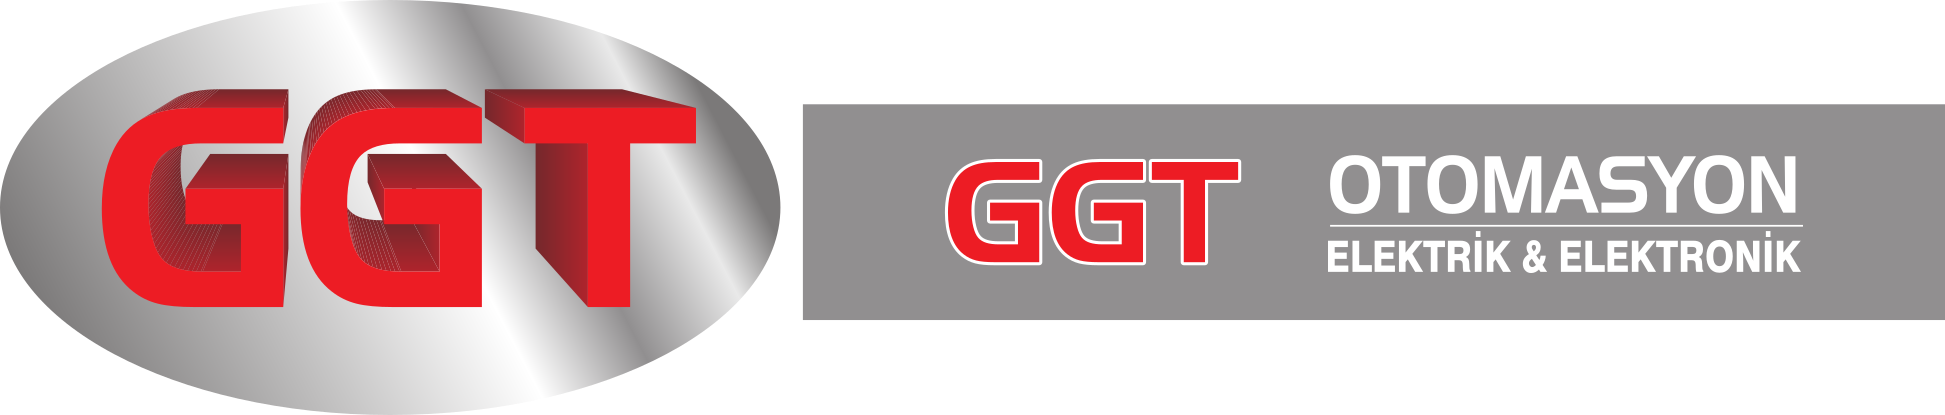 GGT Otomasyon